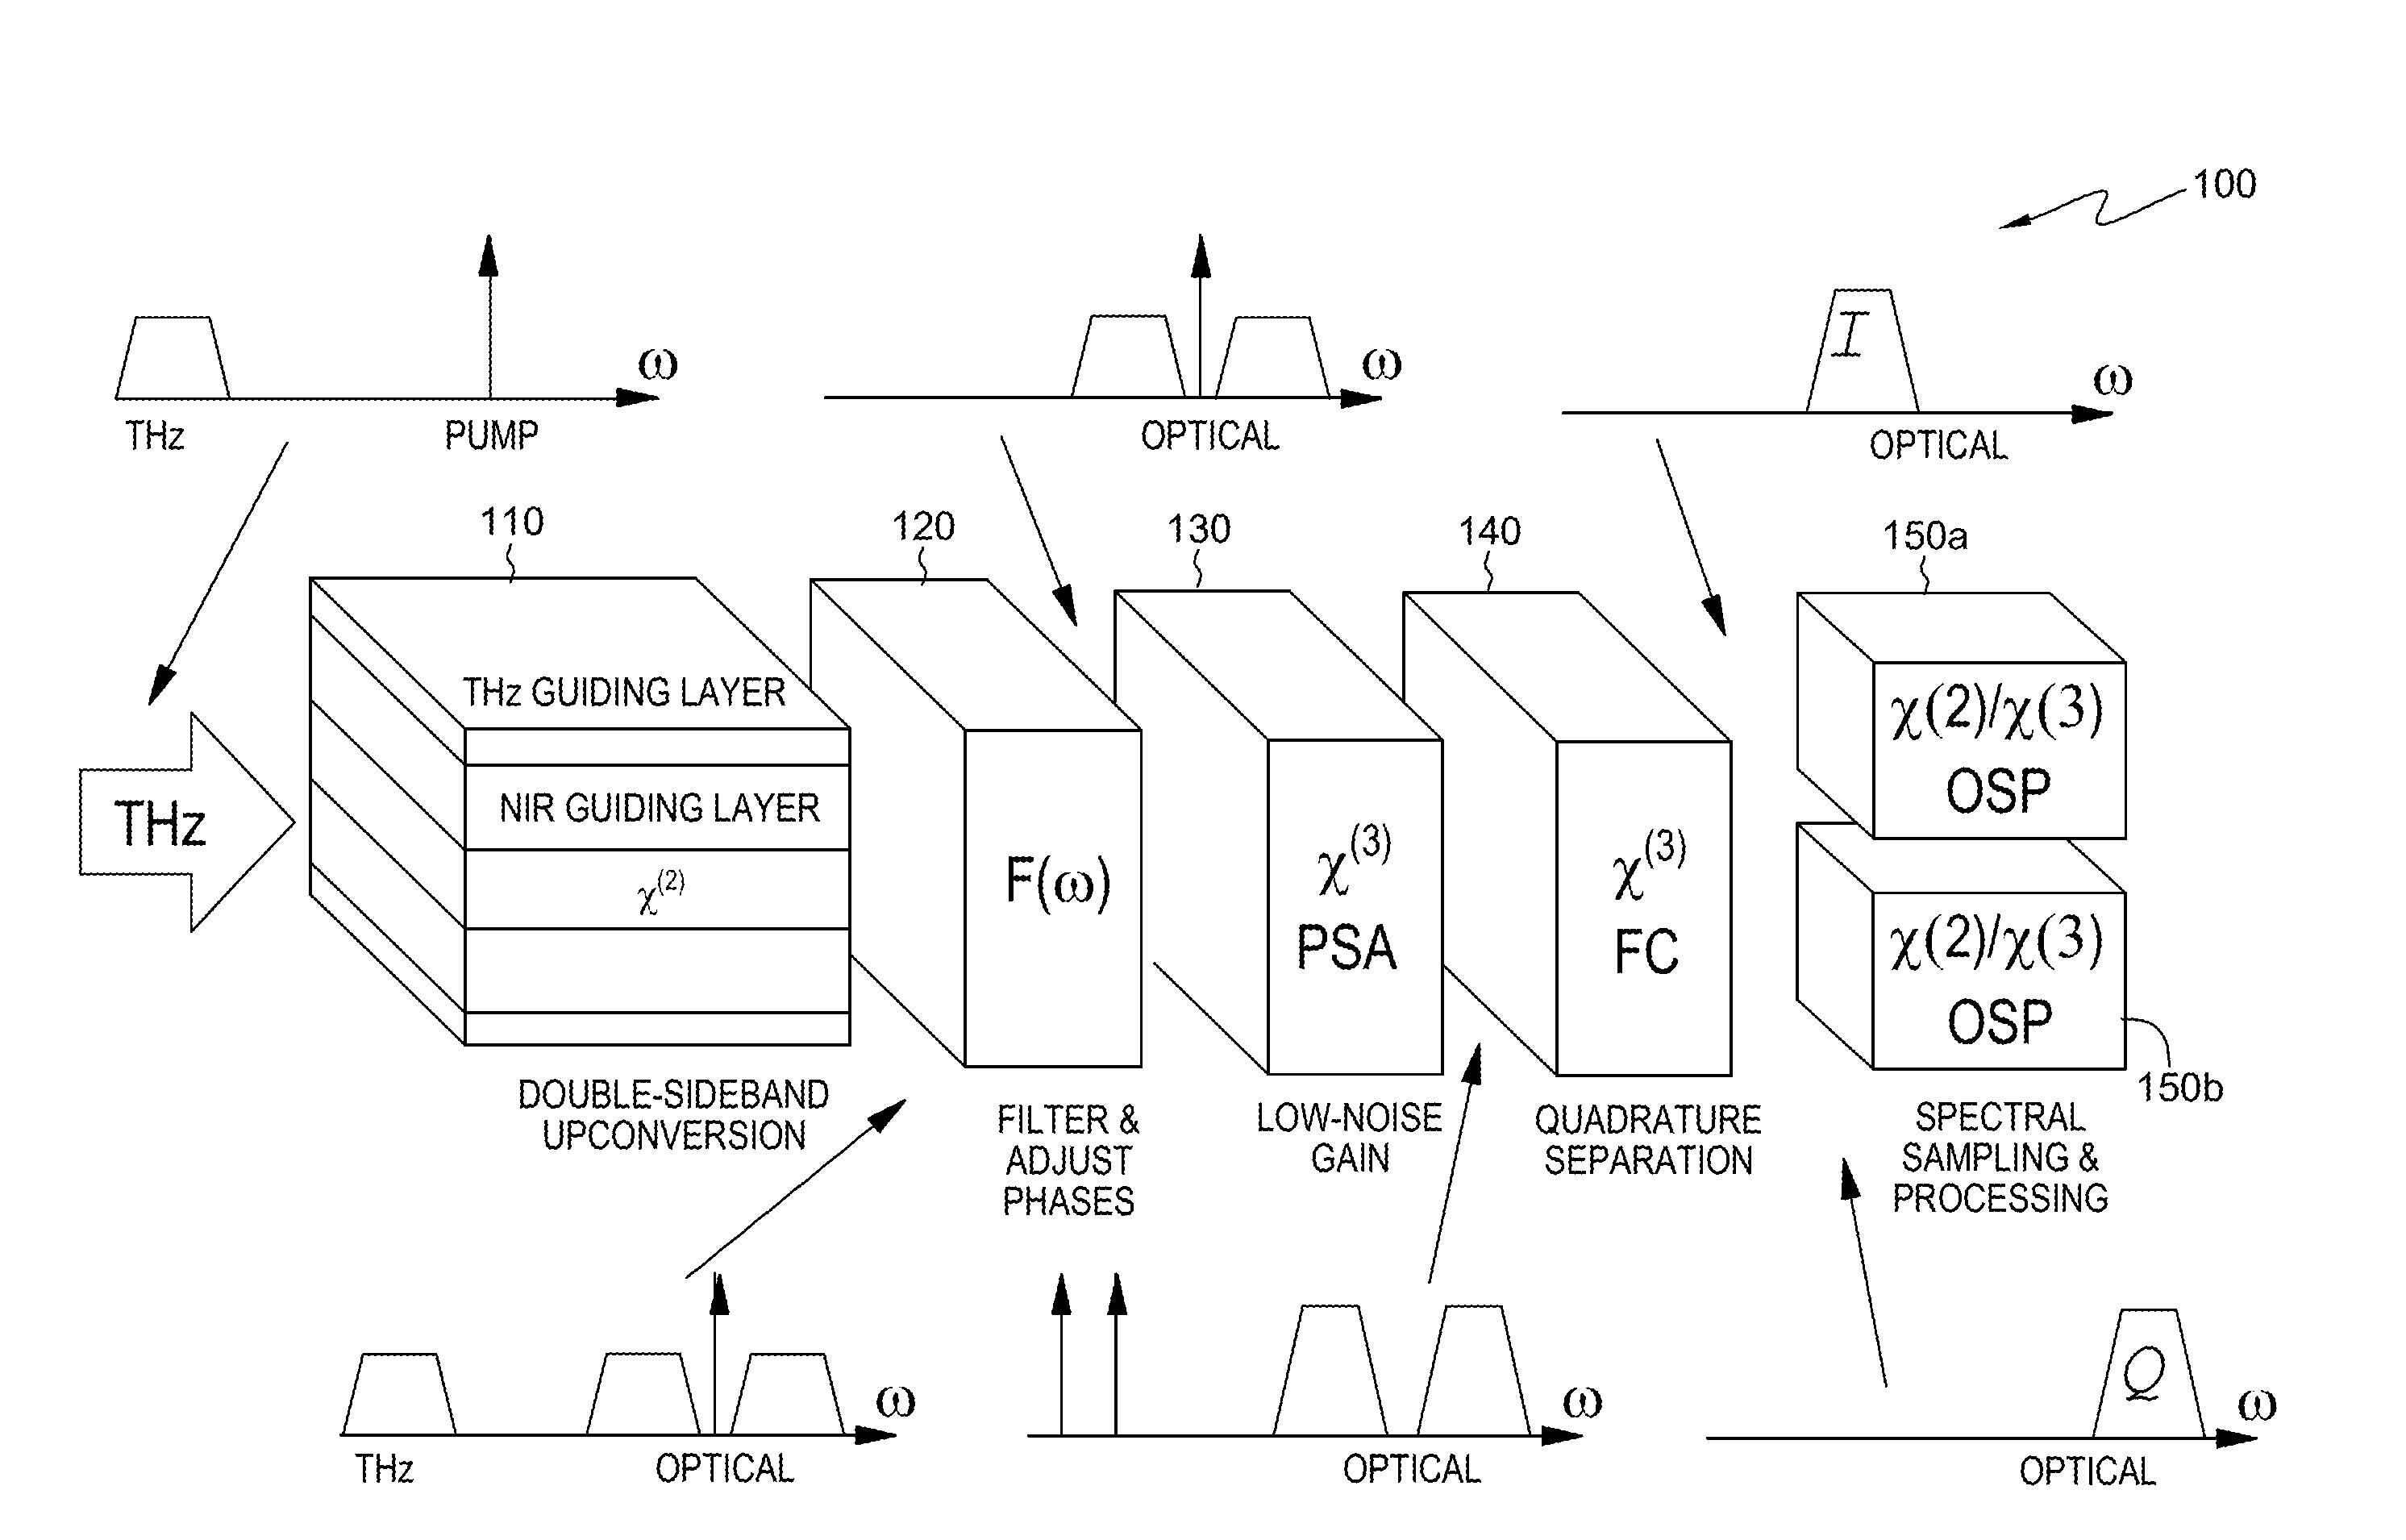 Signal processor and detector